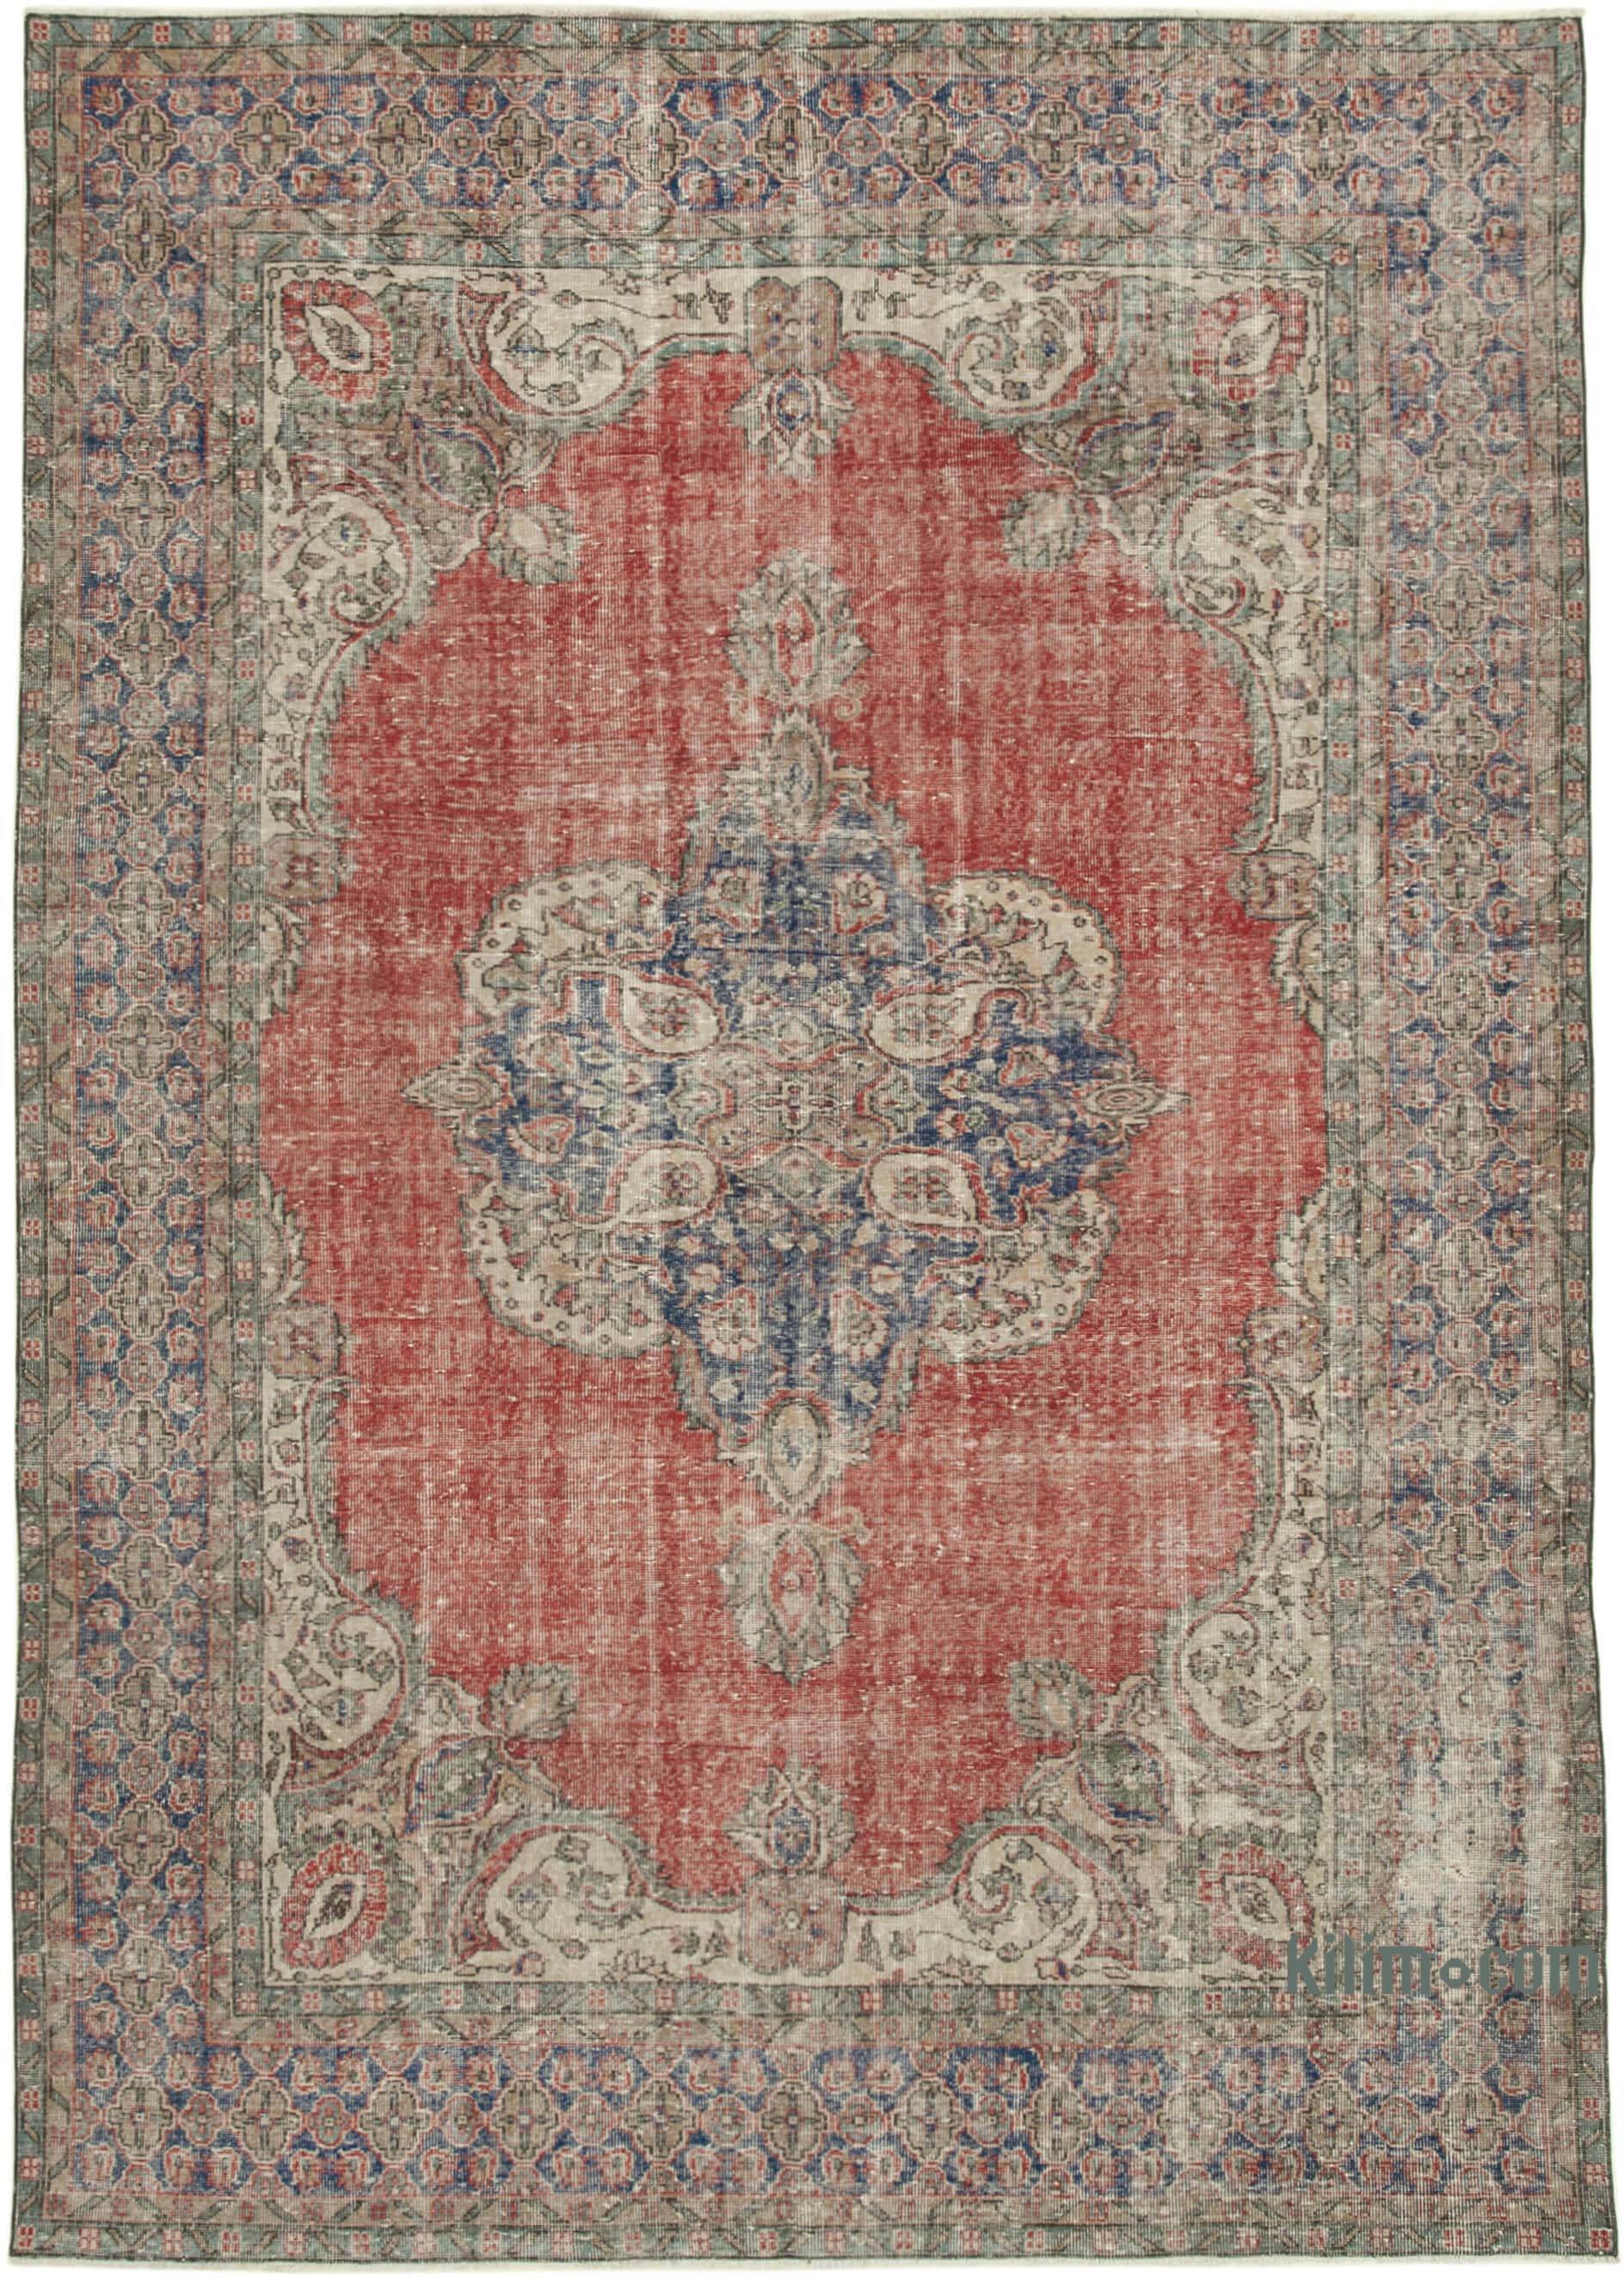 Vintage Hand Knotted Oriental Rug, Tribal Print Area Rugs 8×10